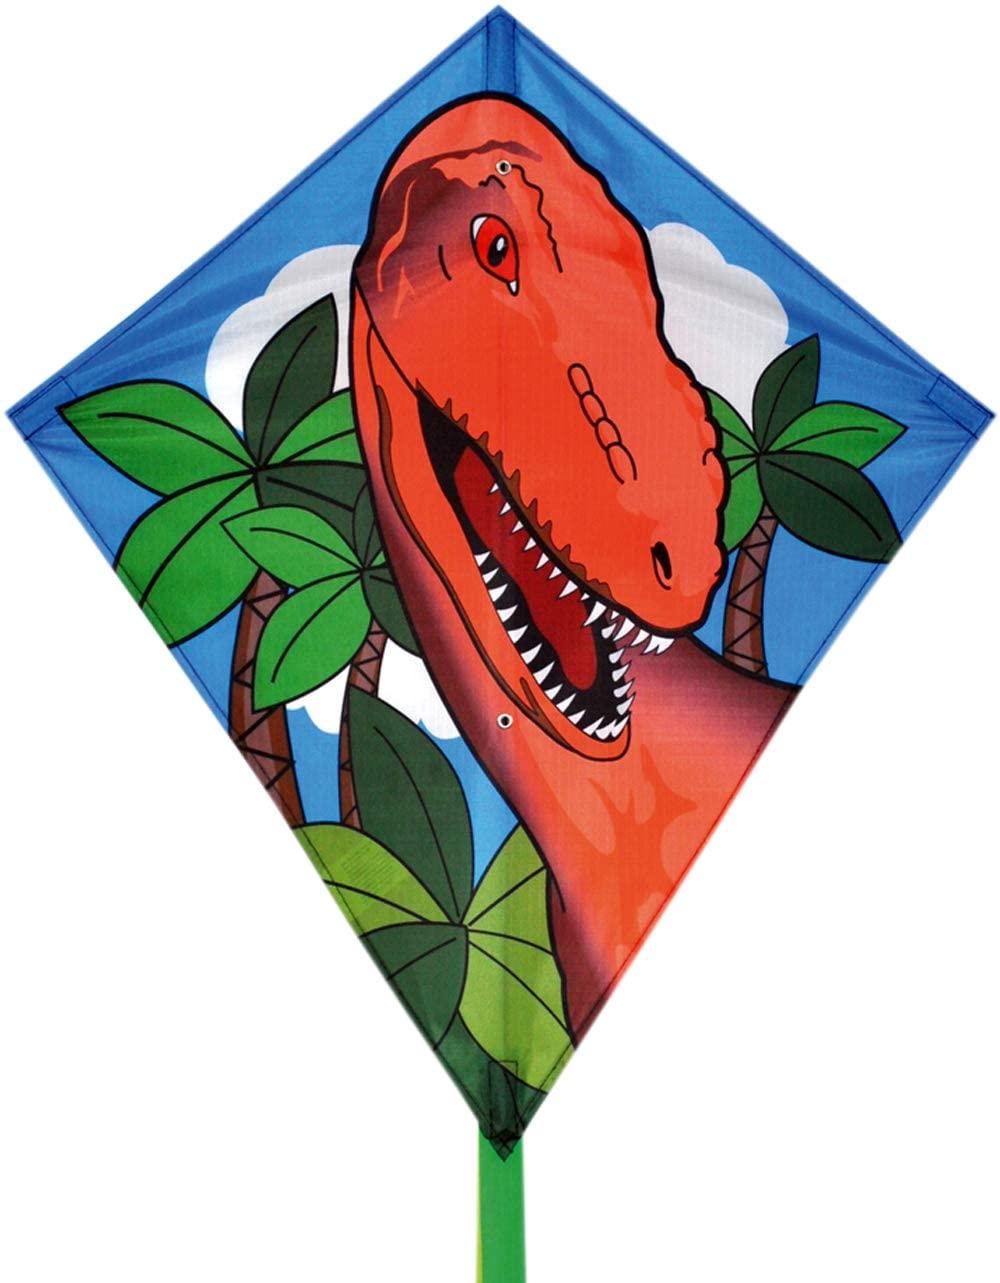 Diamond kite with an orange  T-Rex head.